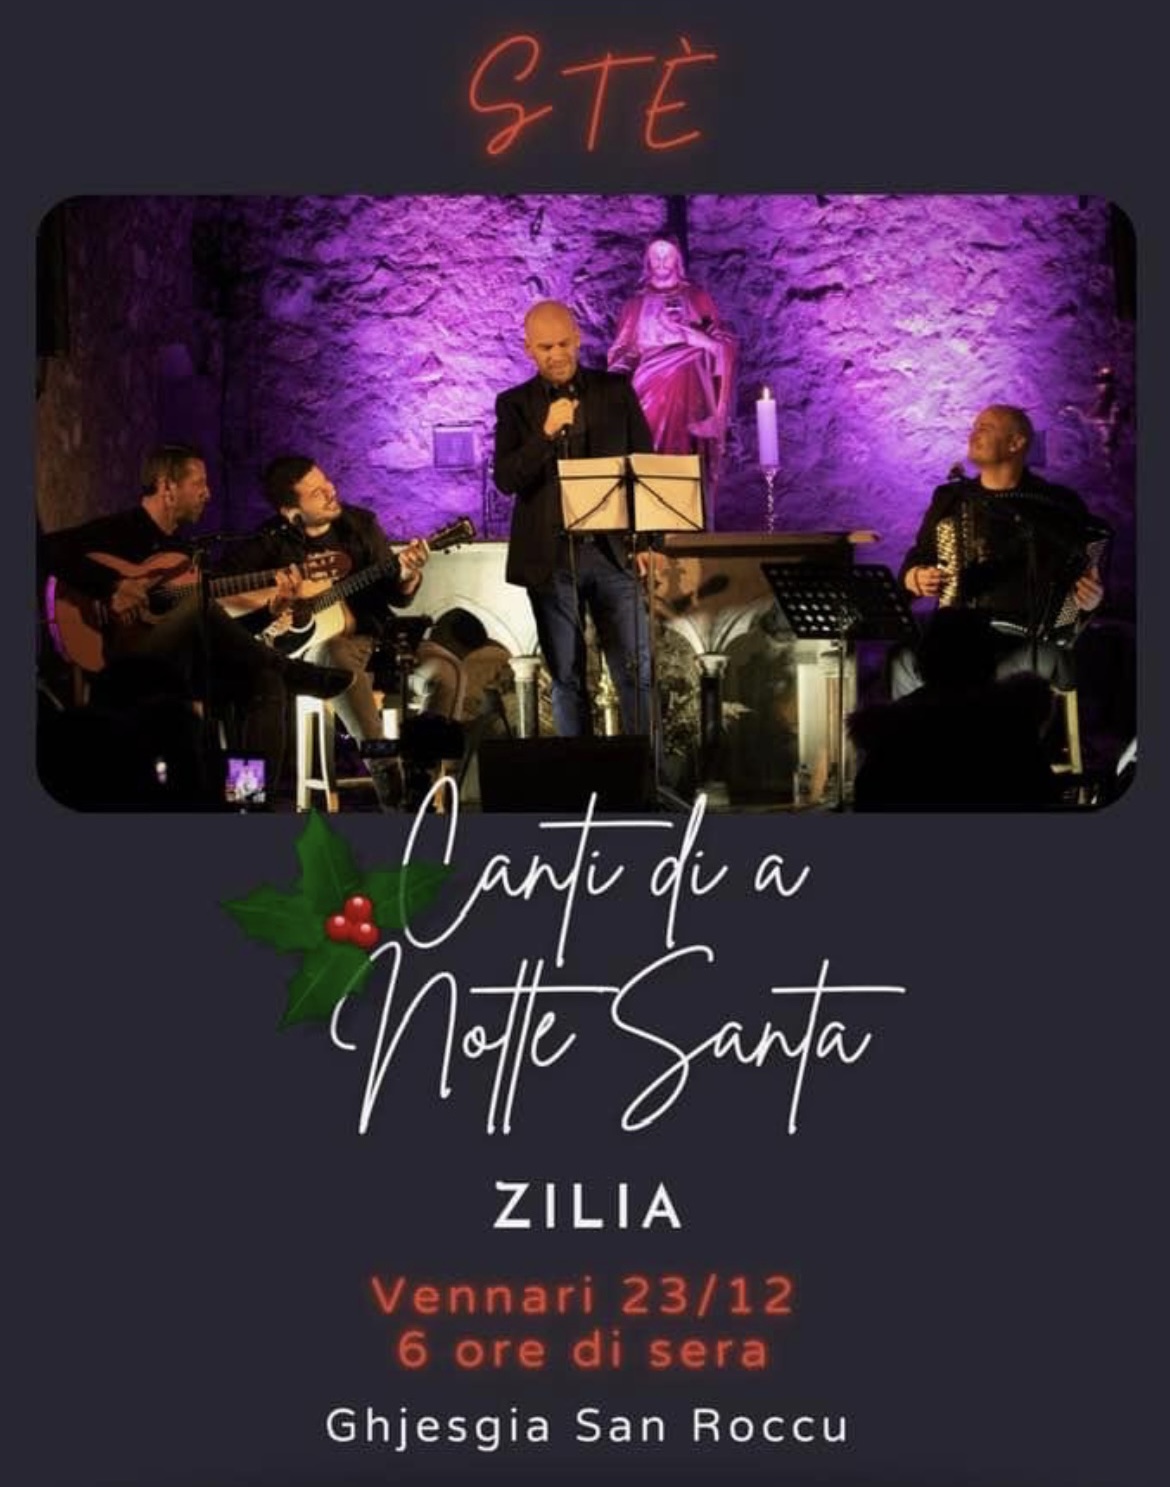 "Canti di a Notte Santa" à Zilia ce vendredi 23 décembre